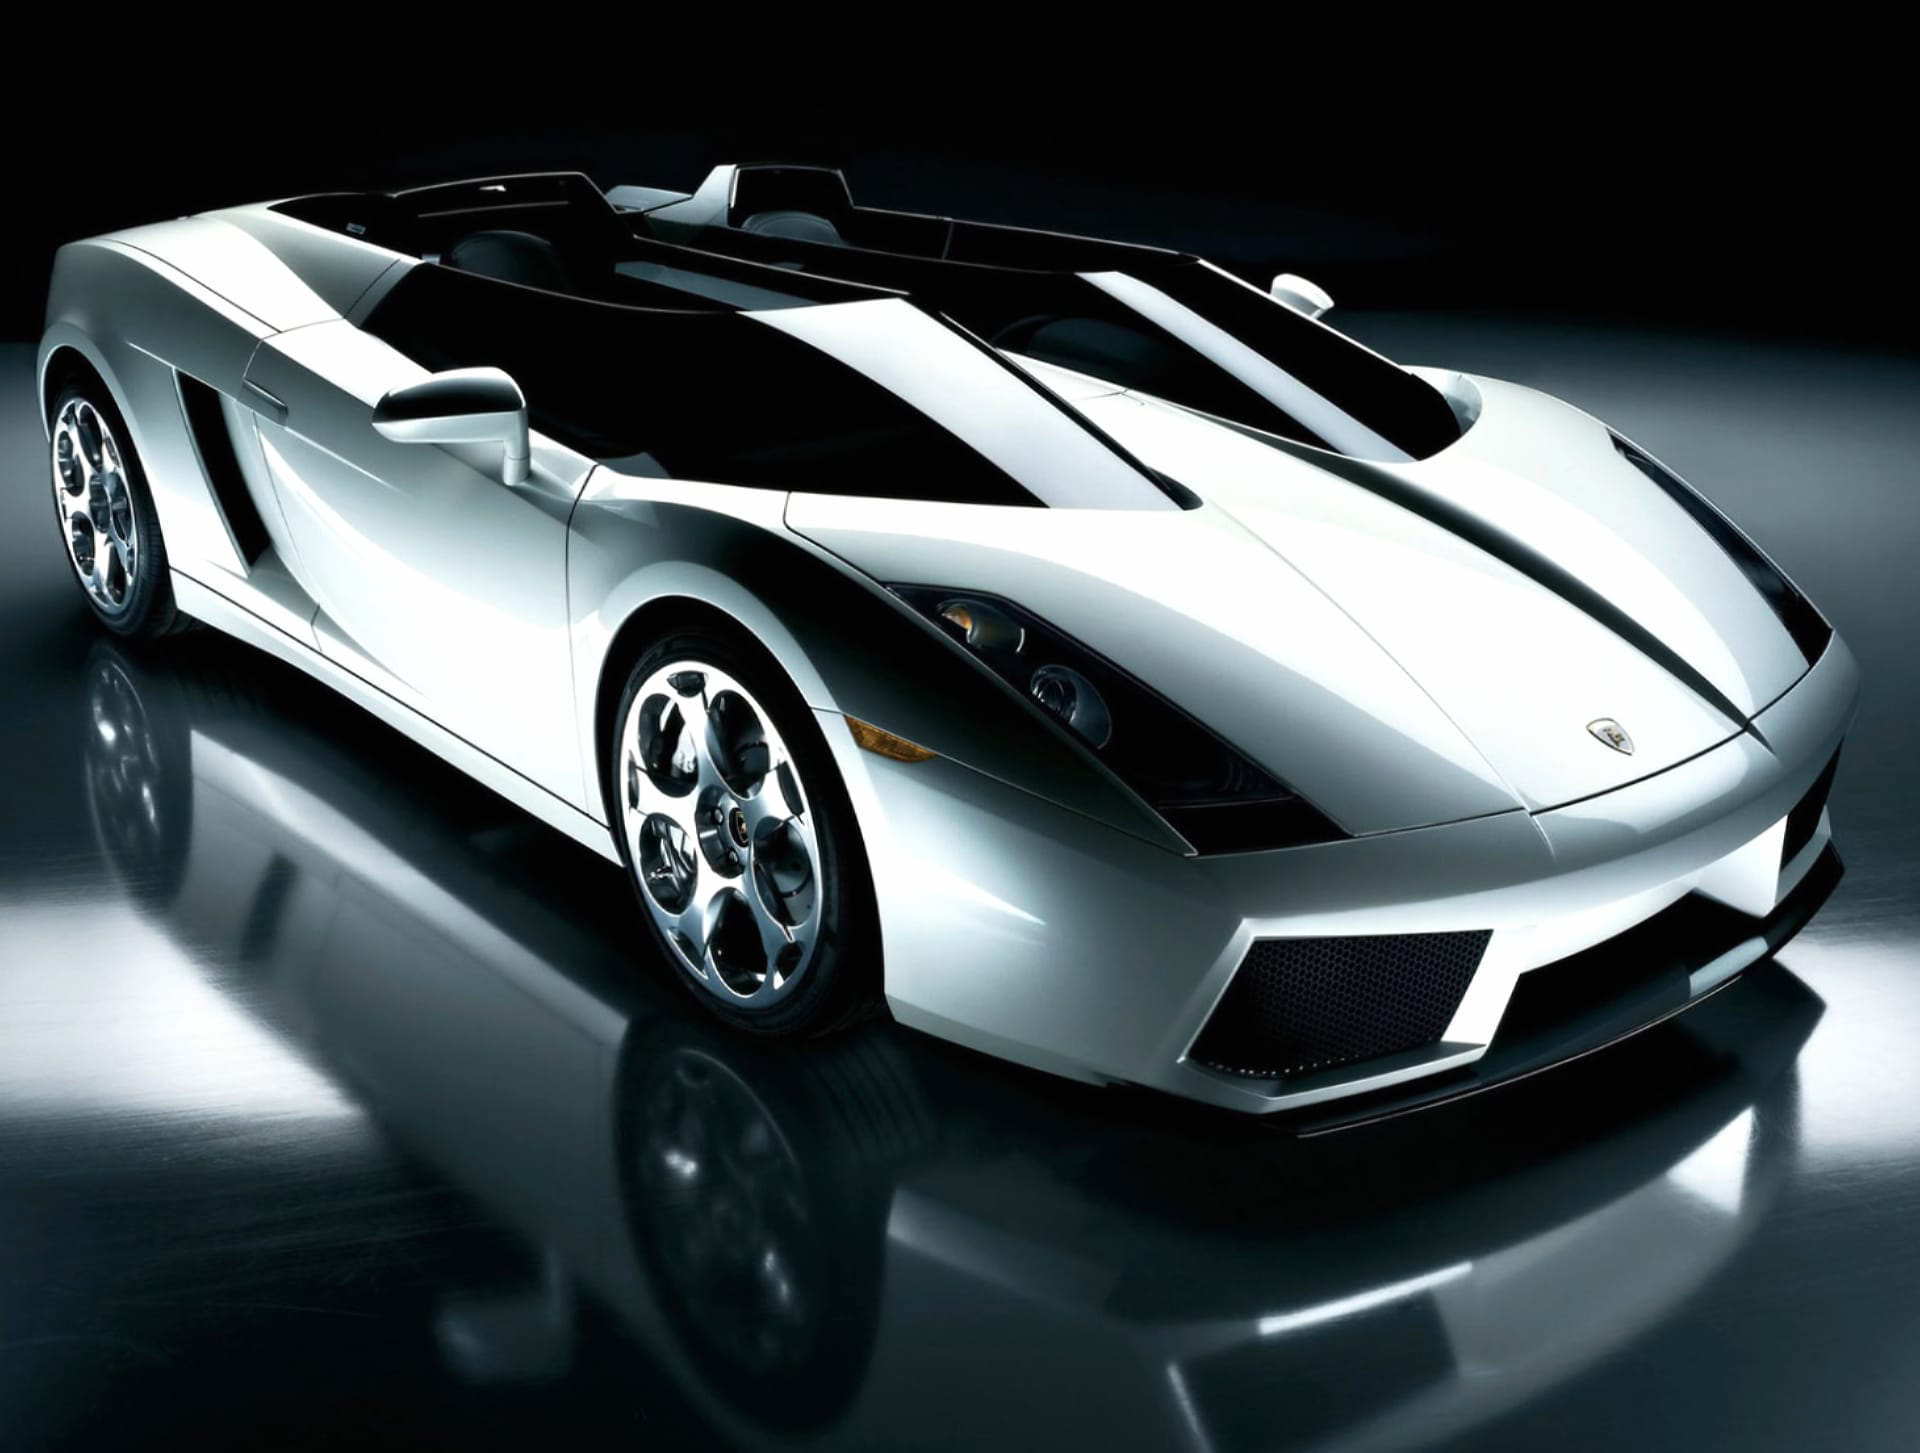 Lamborghini Concept S at 1024 x 1024 iPad size wallpapers HD quality